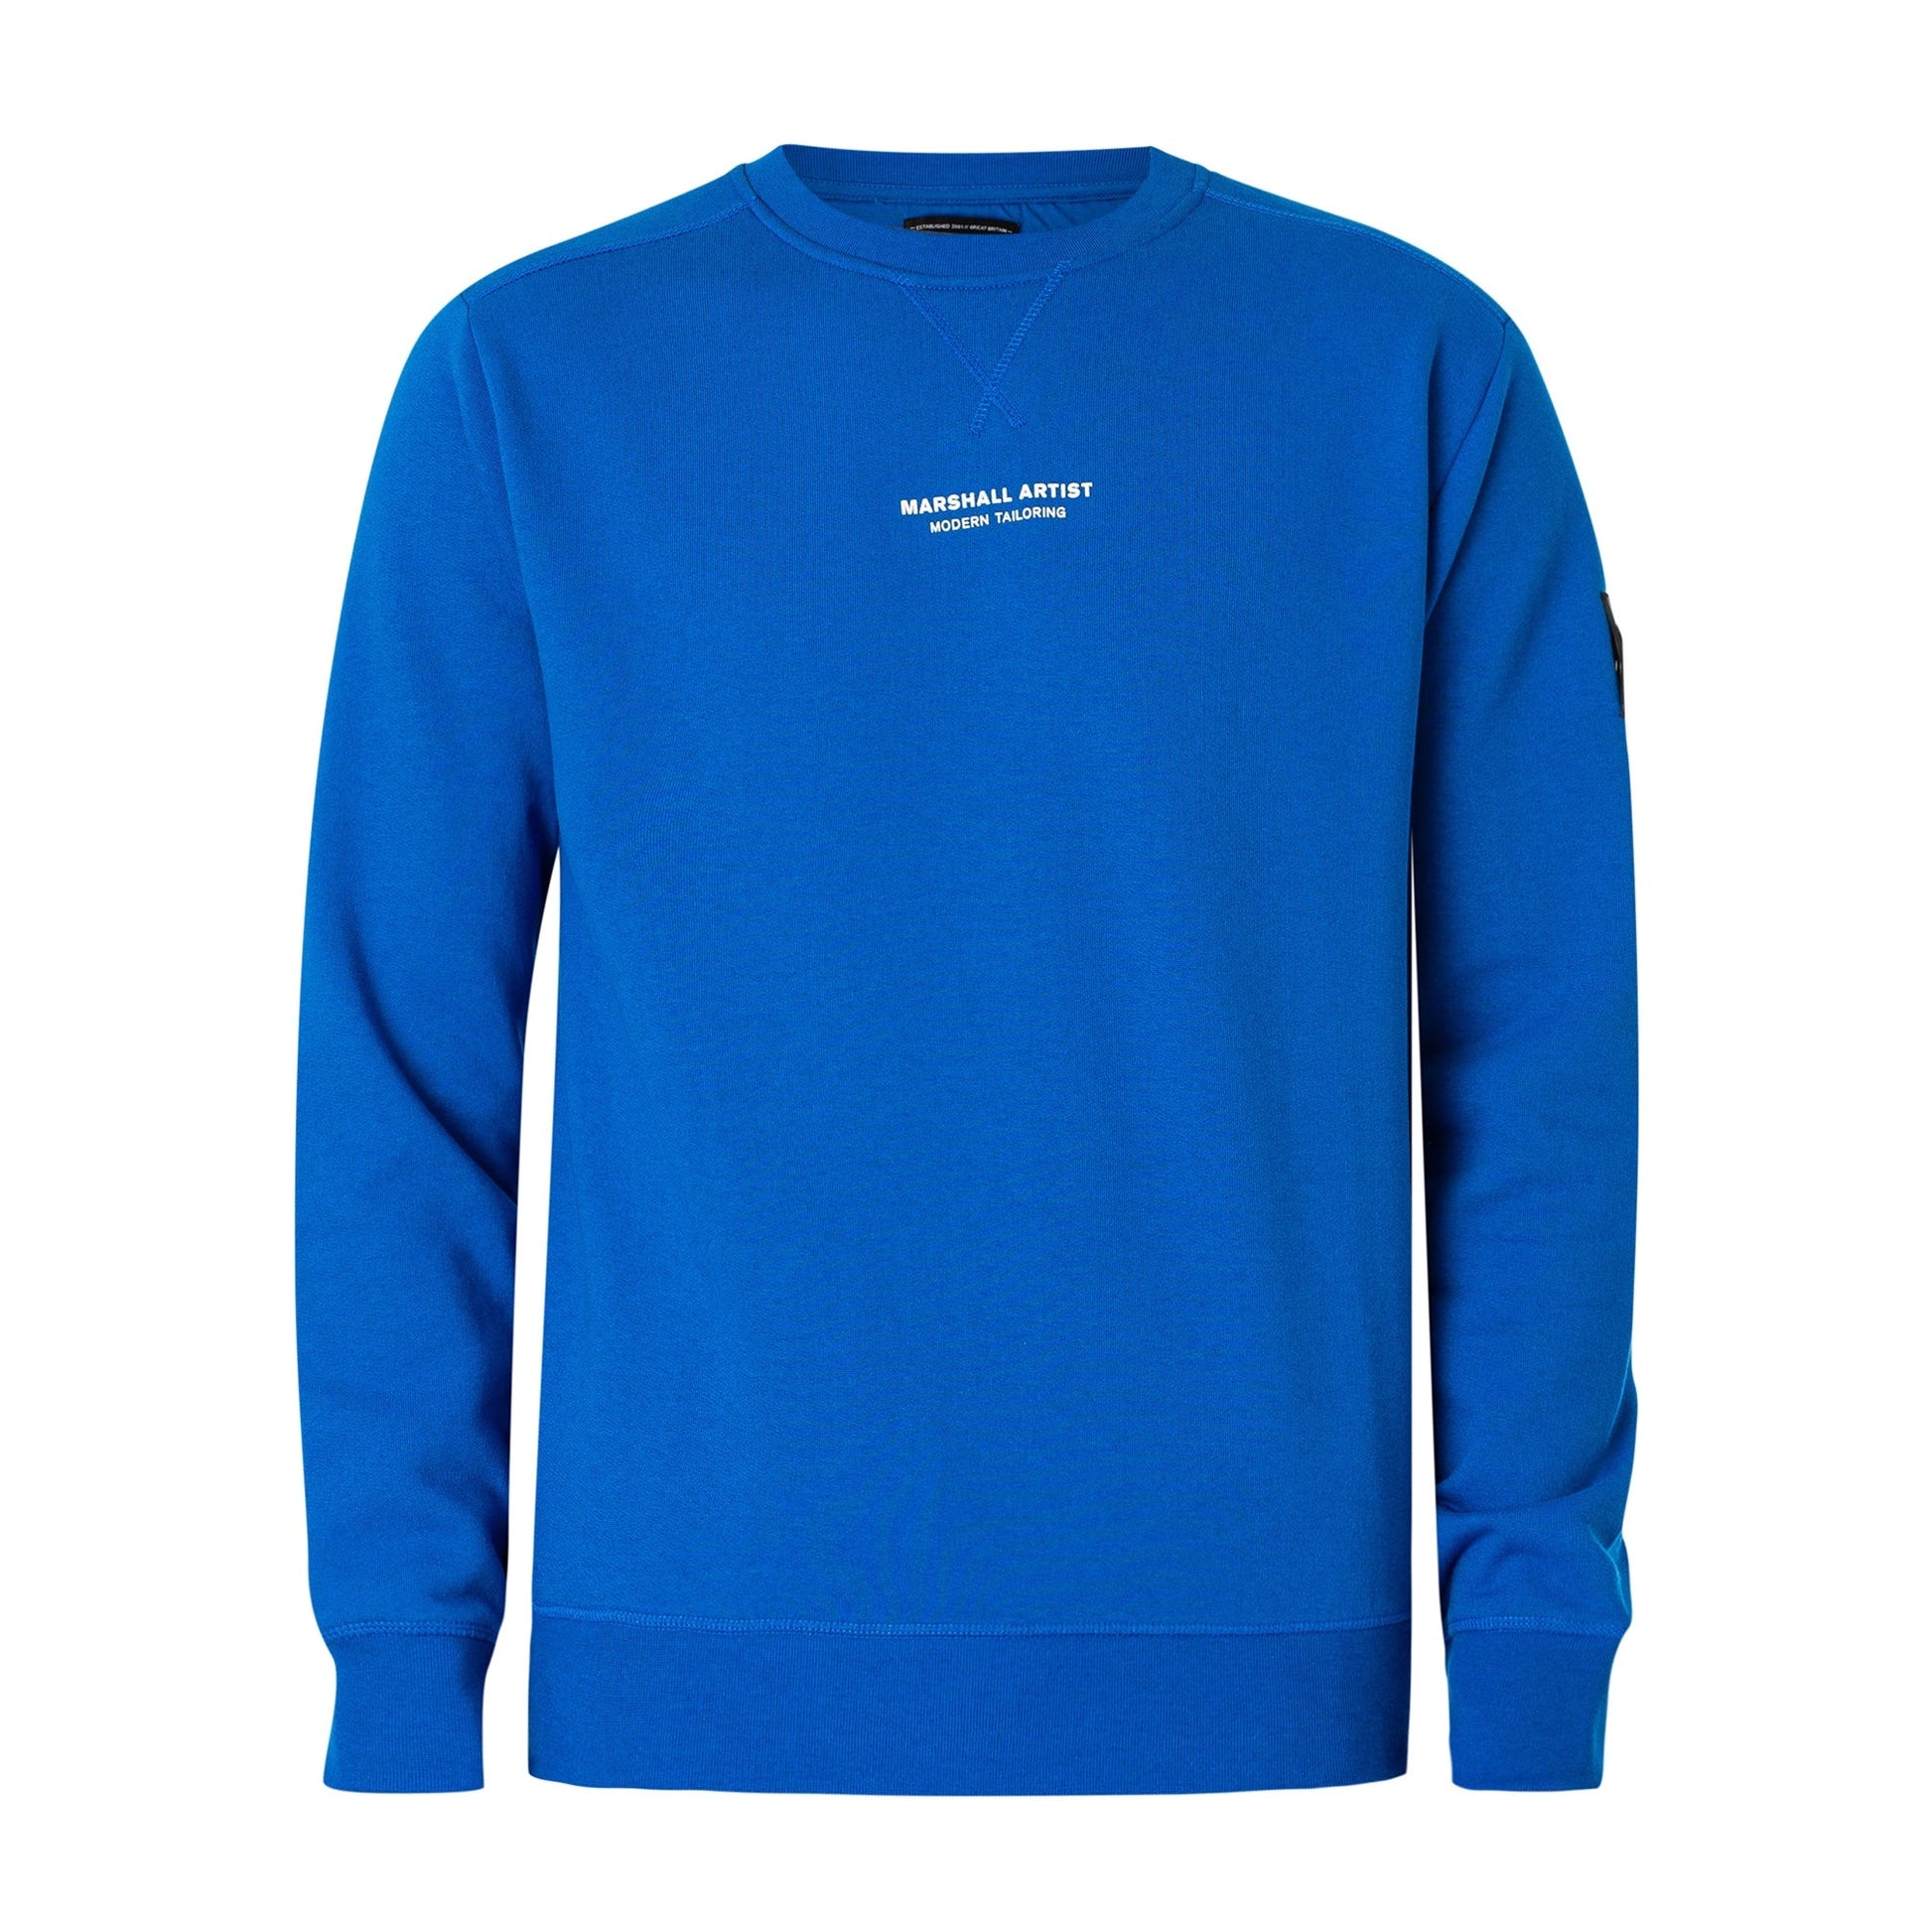 Marshall Artist Siren Sweatshirt - Radial Blue - Escape Menswear